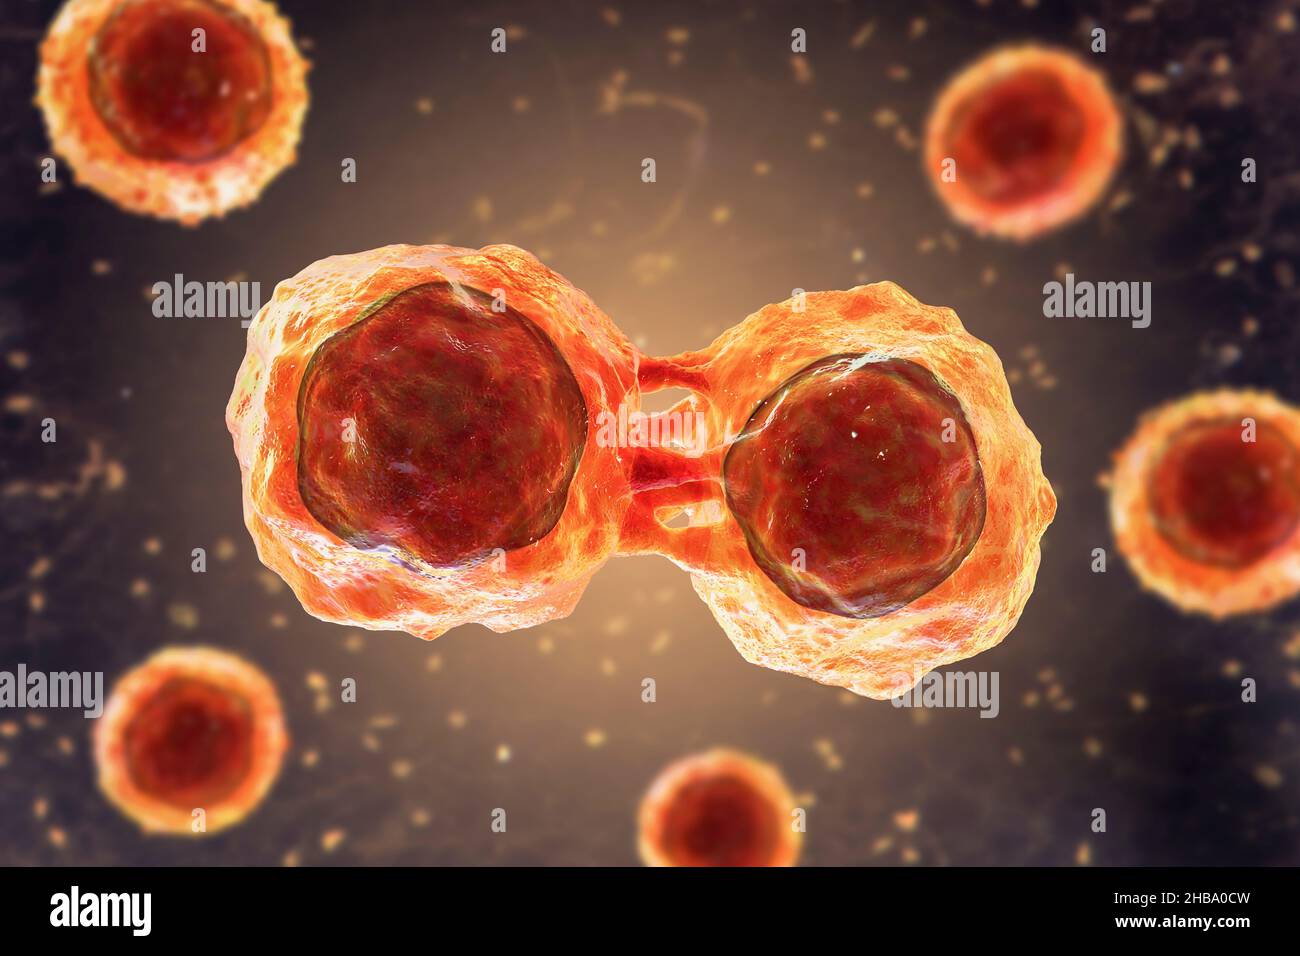 Dividing stem cells, illustration. Stock Photo